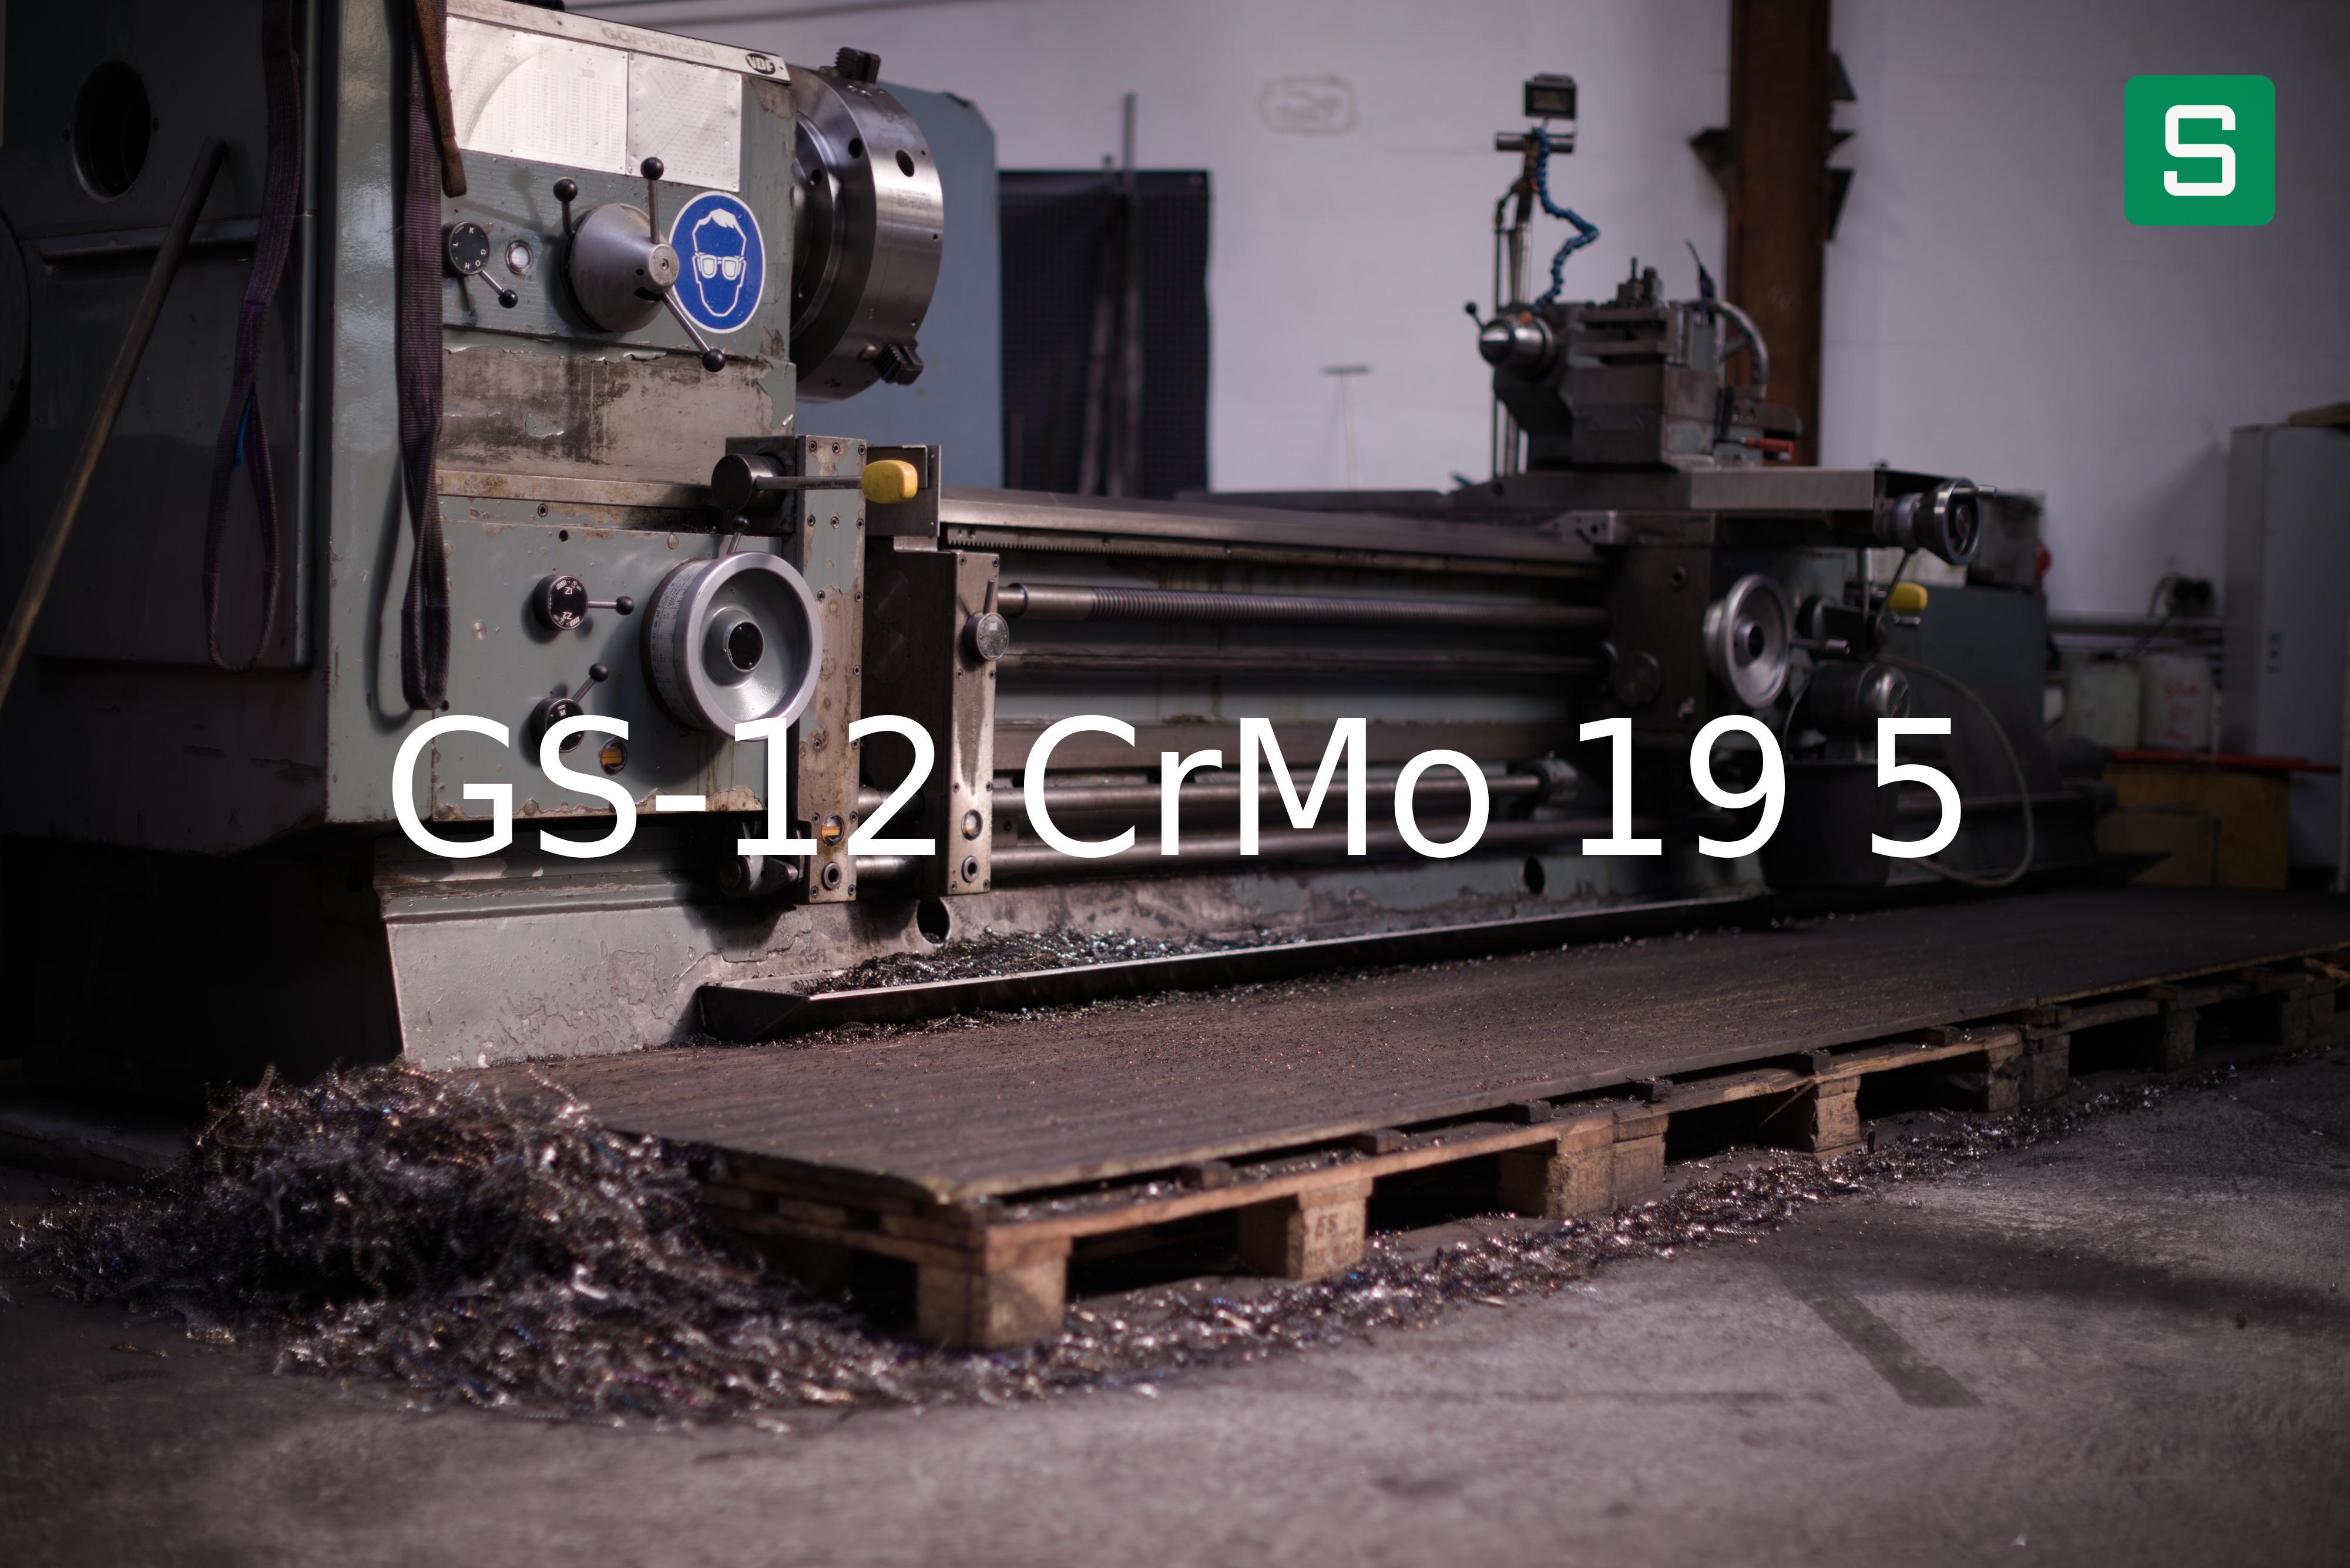 Steel Material: GS-12 CrMo 19 5